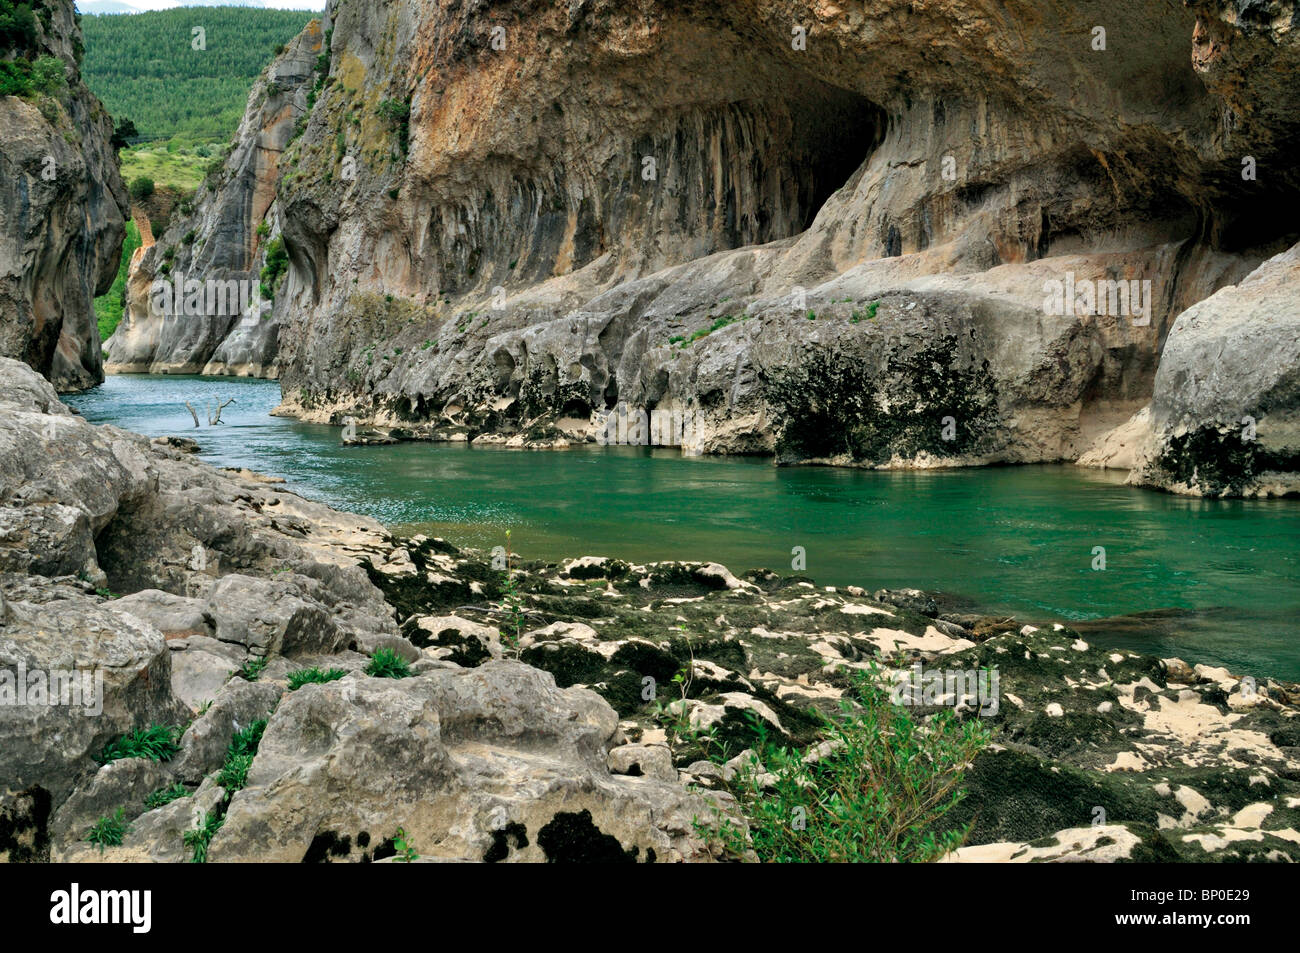 Spain, Navarra: Canyon Foz de Lumbier Stock Photo